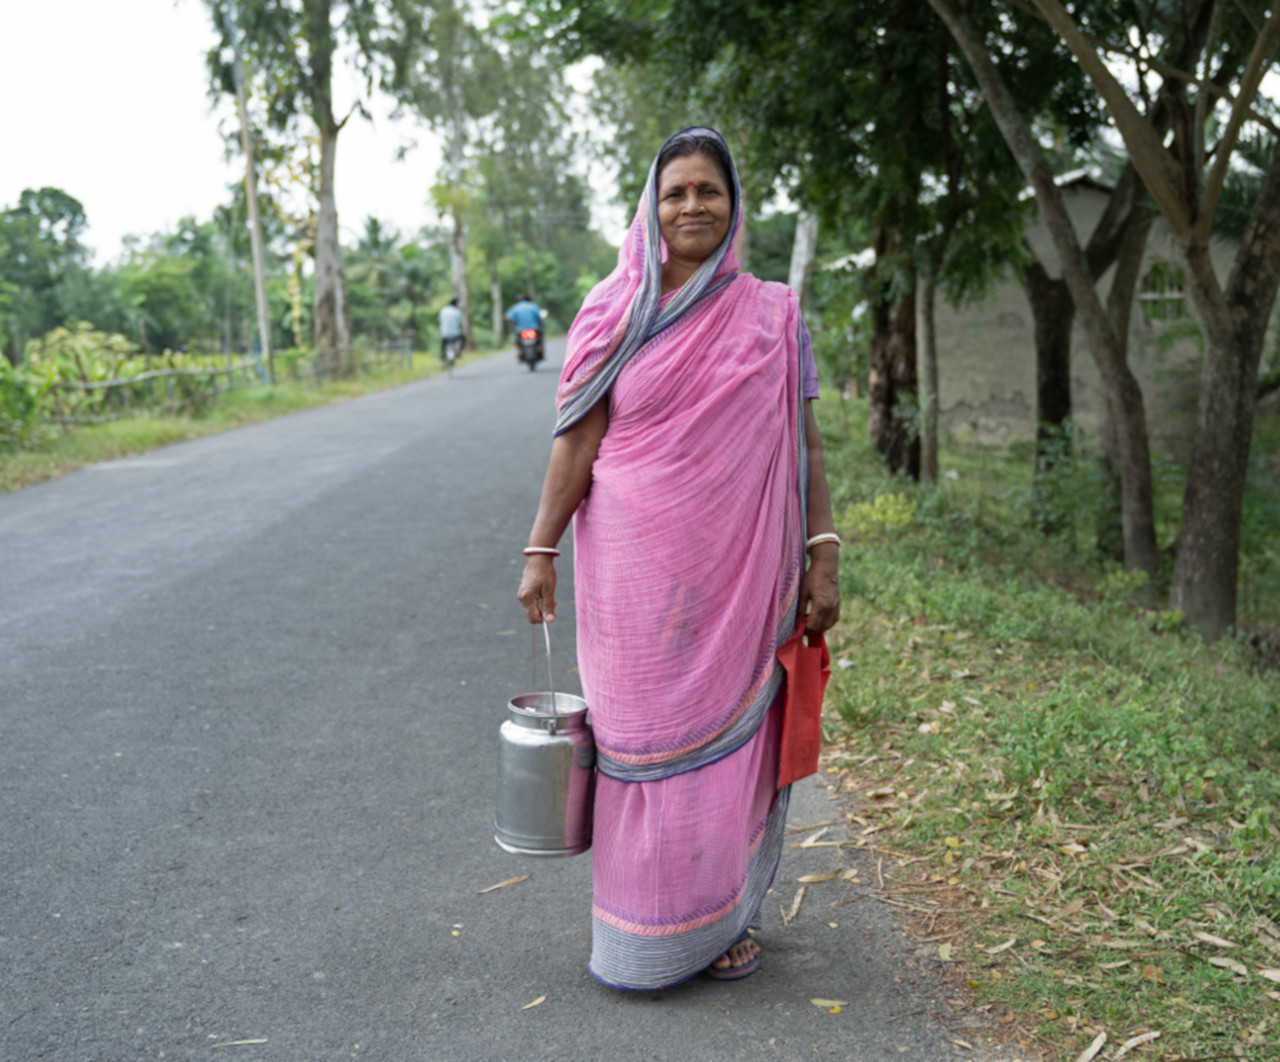 Sundarbans women lead the way in making dairy farms organic